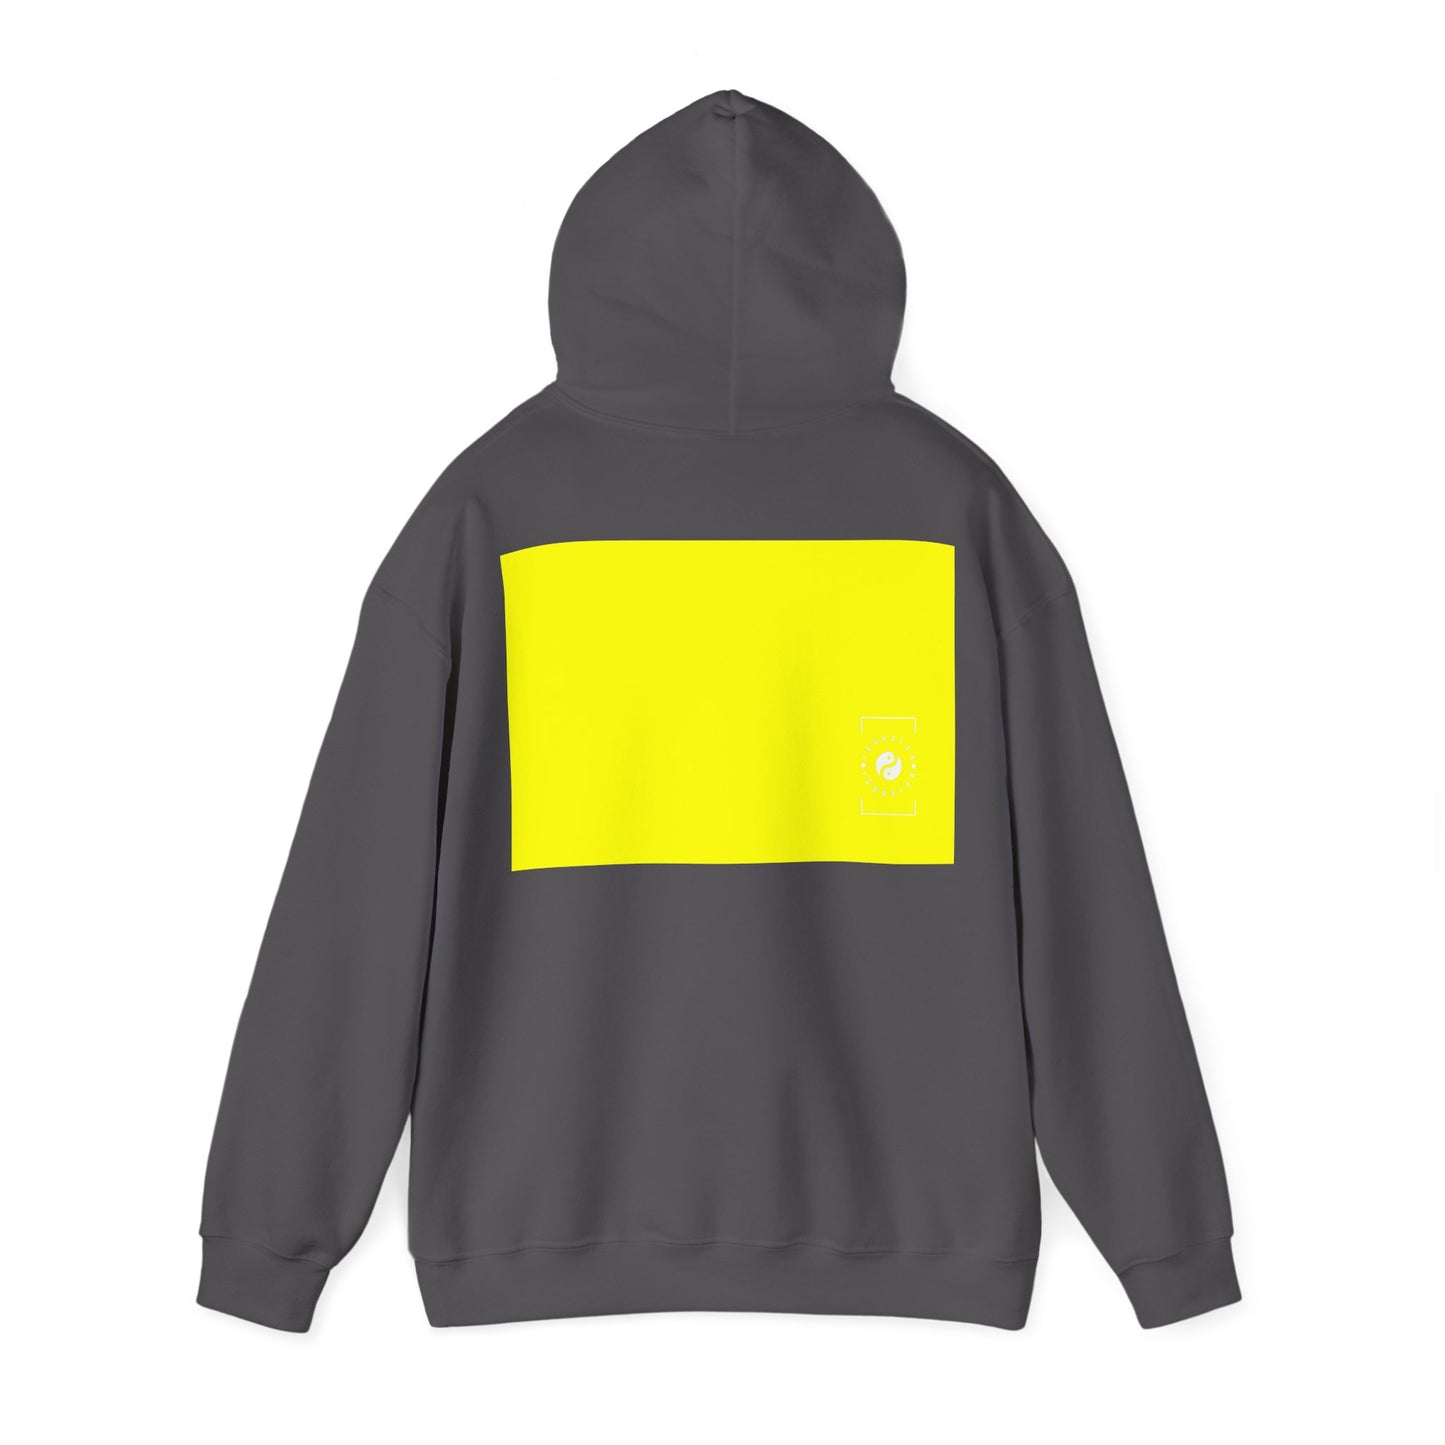 Neon Yellow FFFF00 - Hoodie